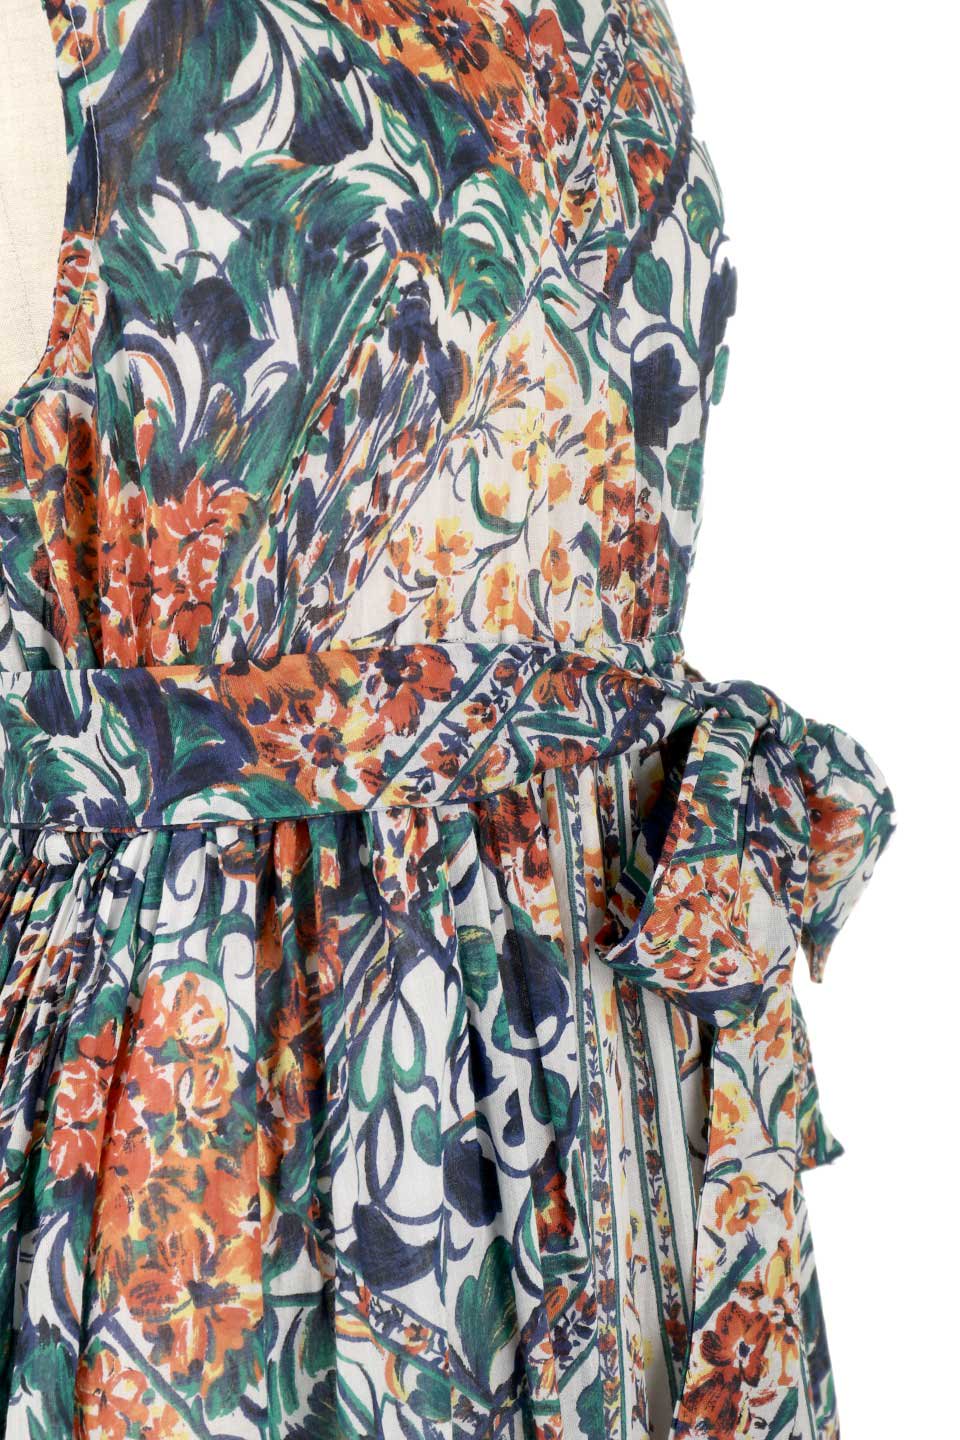 India Cotton Floral Print Dress インドコットン・花柄ワンピース